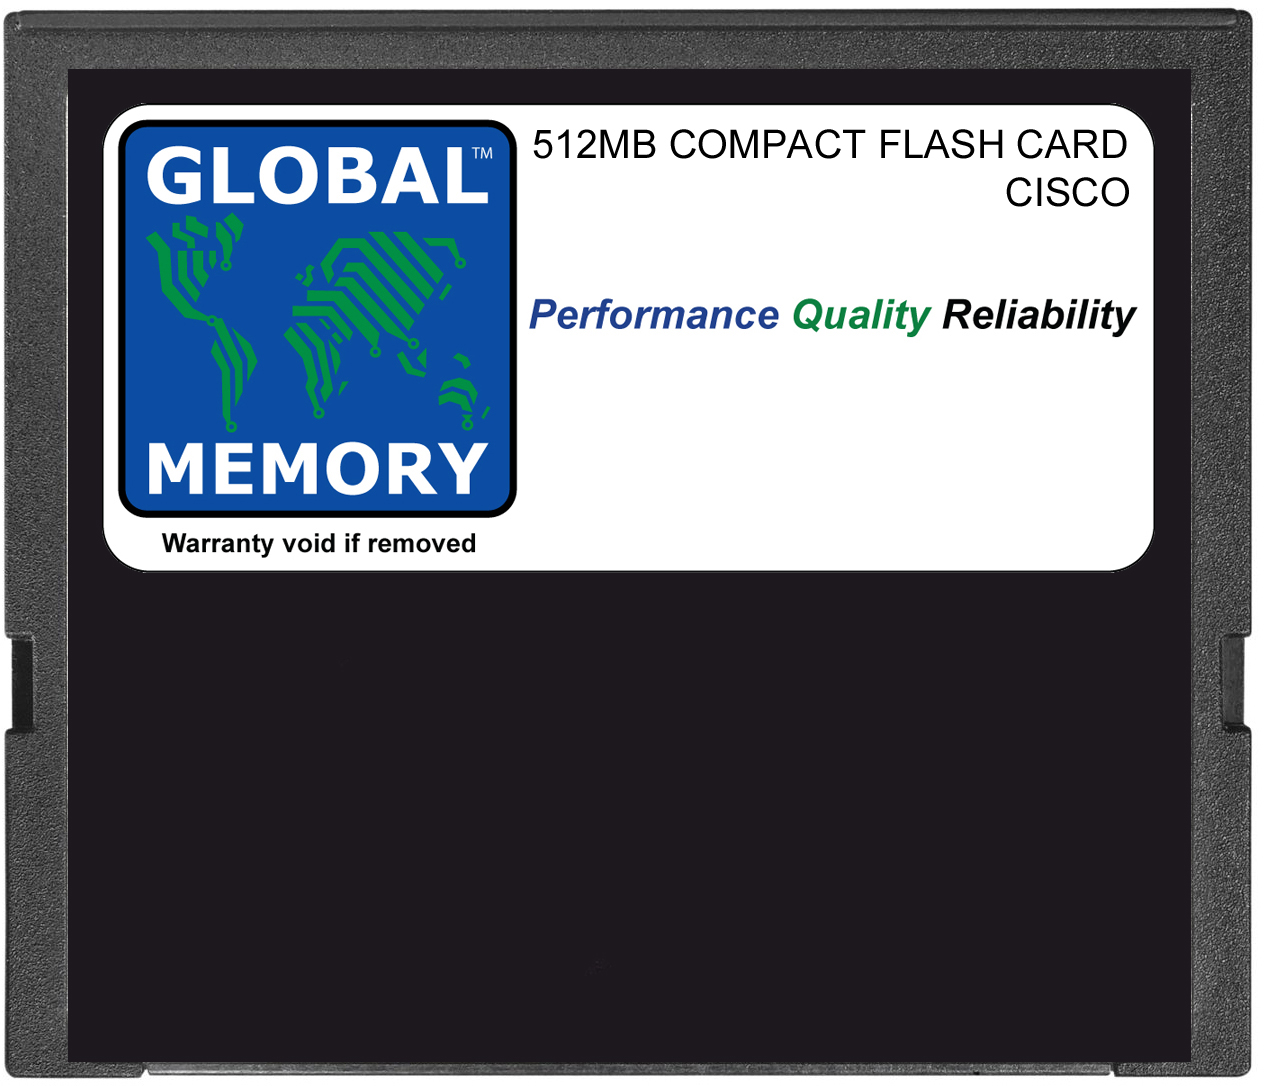 512MB COMPACT FLASH CARD MEMORY FOR CISCO RSP720-3C-GE / RSP720-3CXL-GE (MEM-RSP720-CF512M)